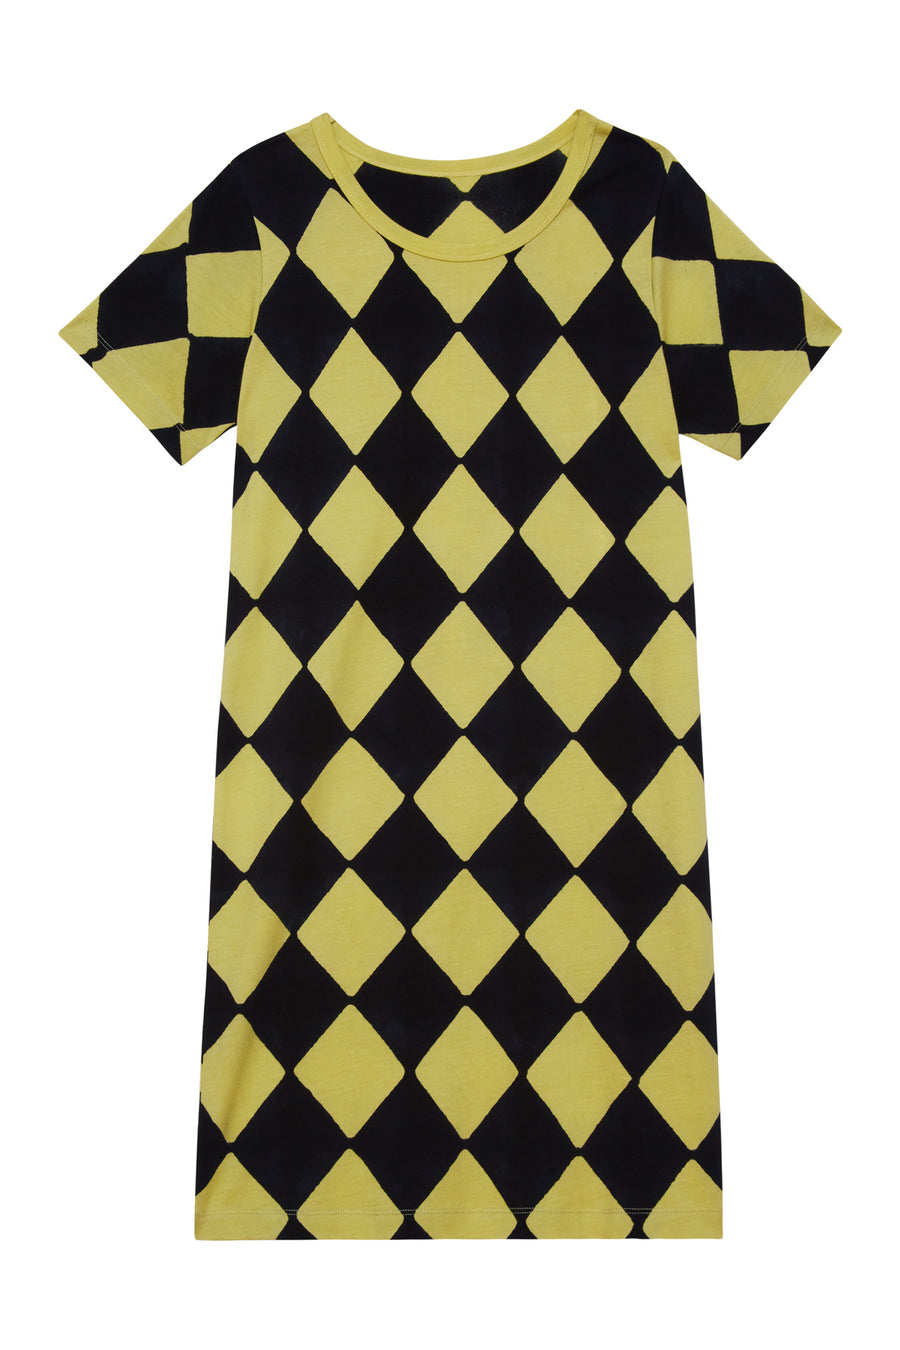 Batsheva T-Shirt Dress in Black & Yellow Daisy